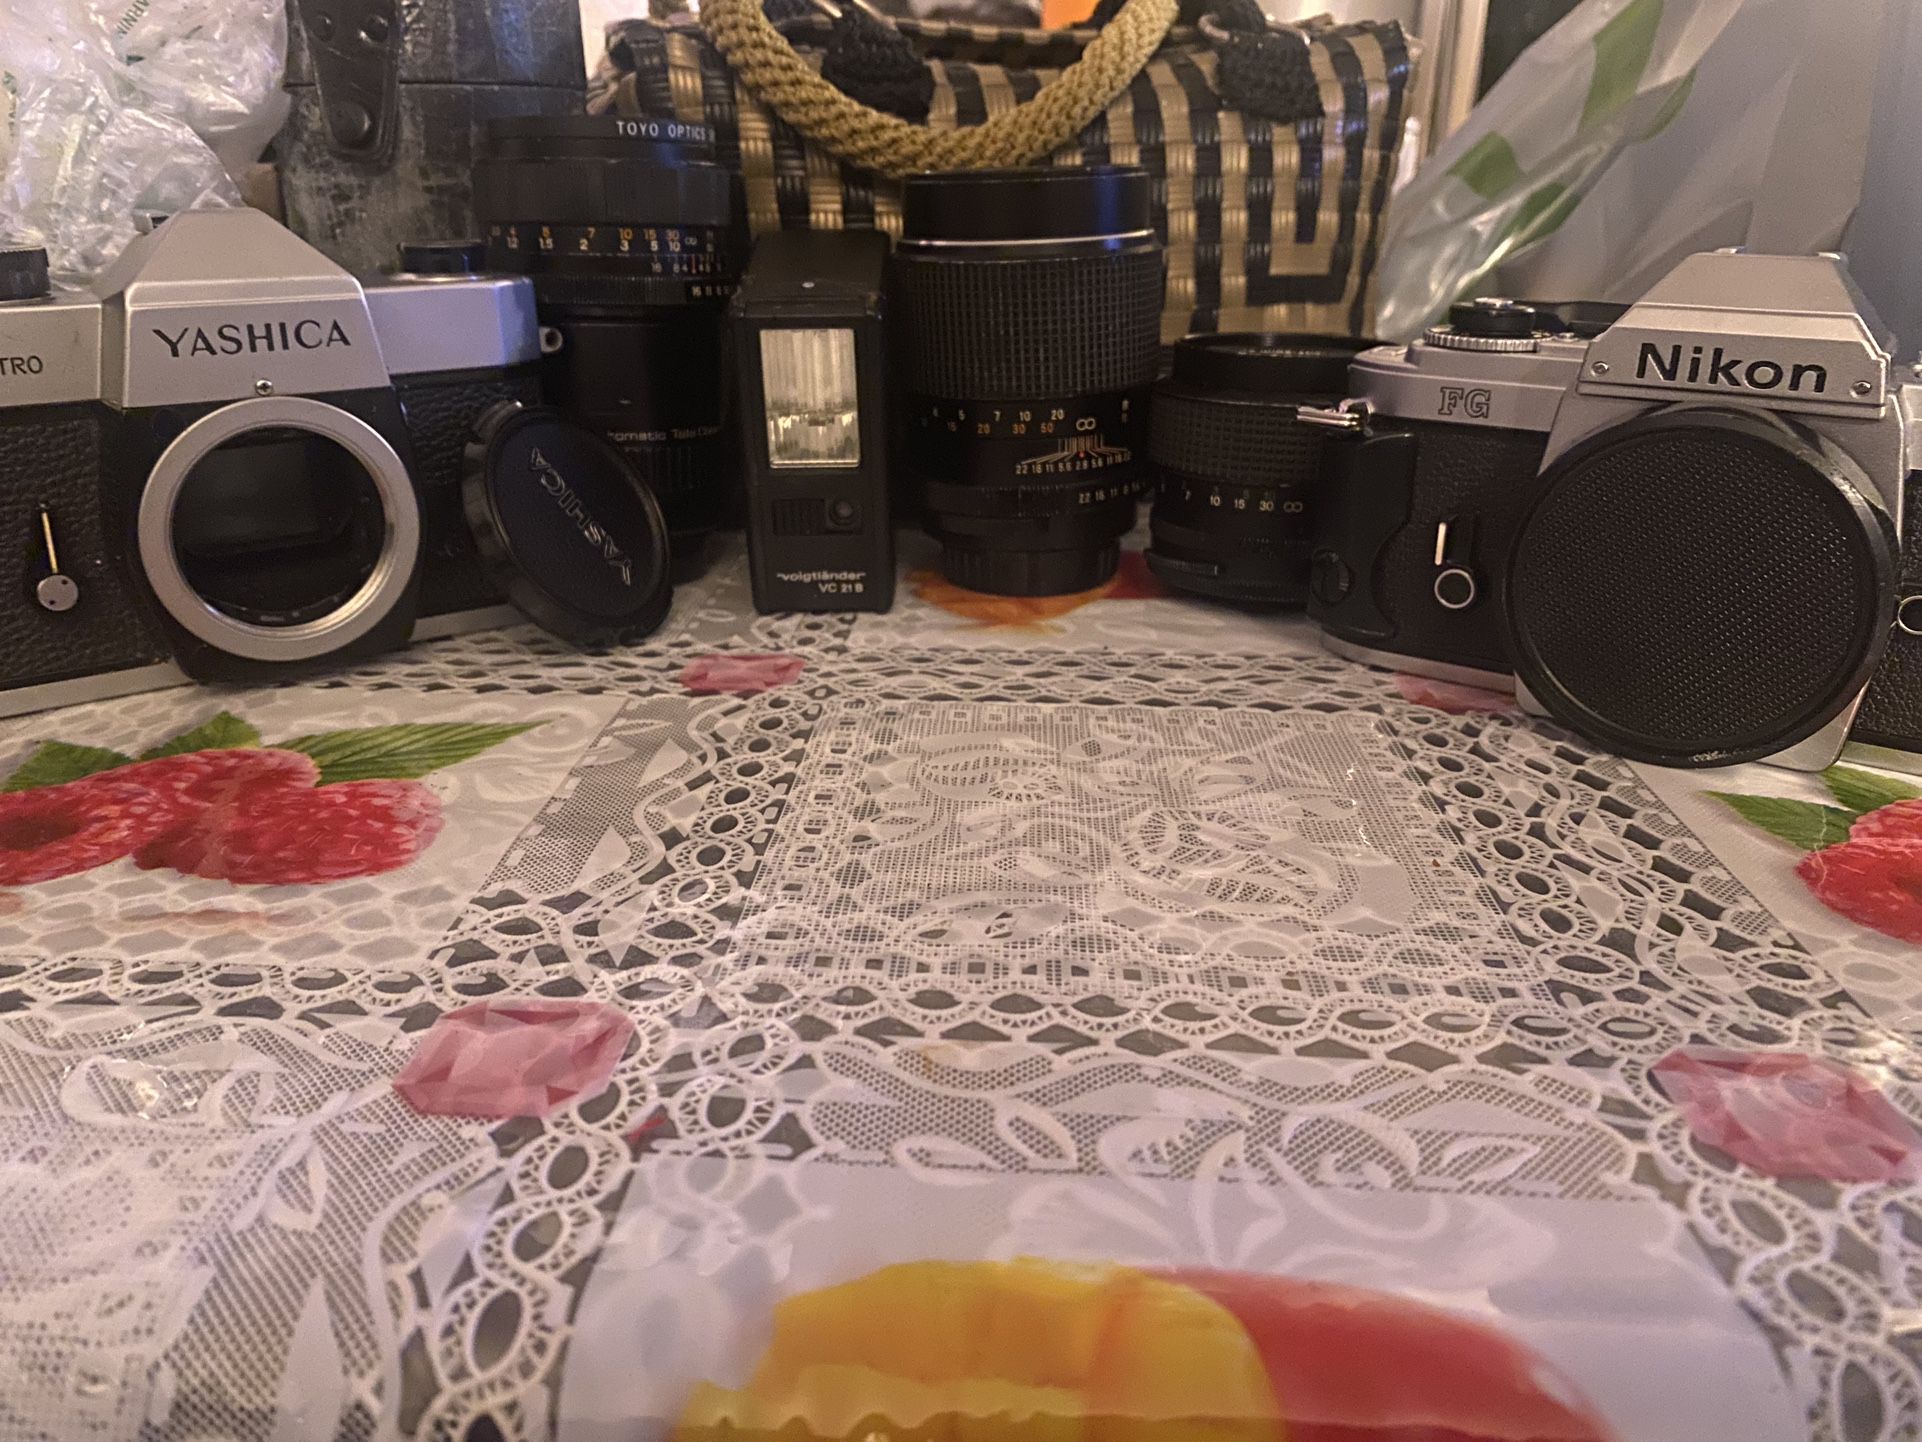 Camera Pack Nikon/yashlca